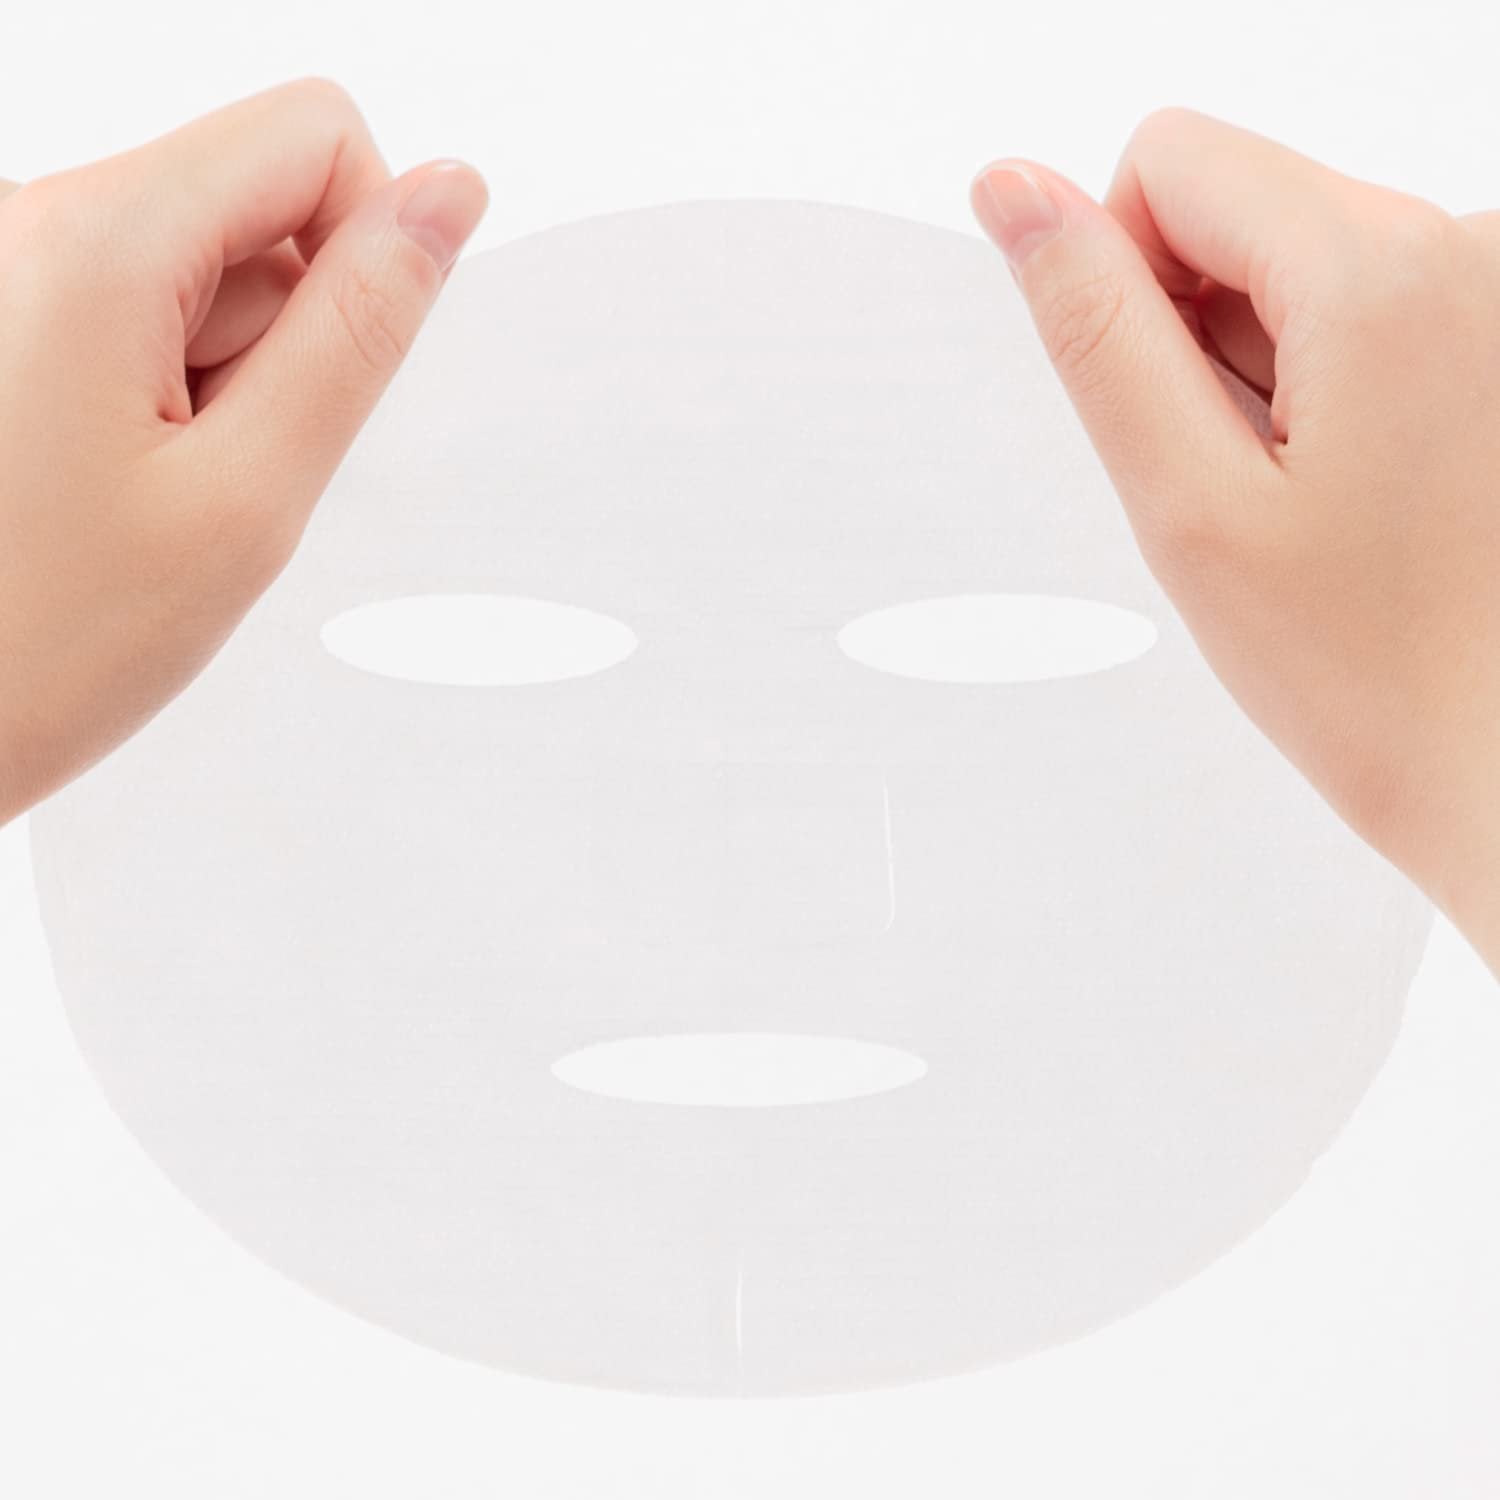 Kose Clear Turn Vitamin C Cica Hydrating & Brightening Facial Sheet Mask 40 ct.